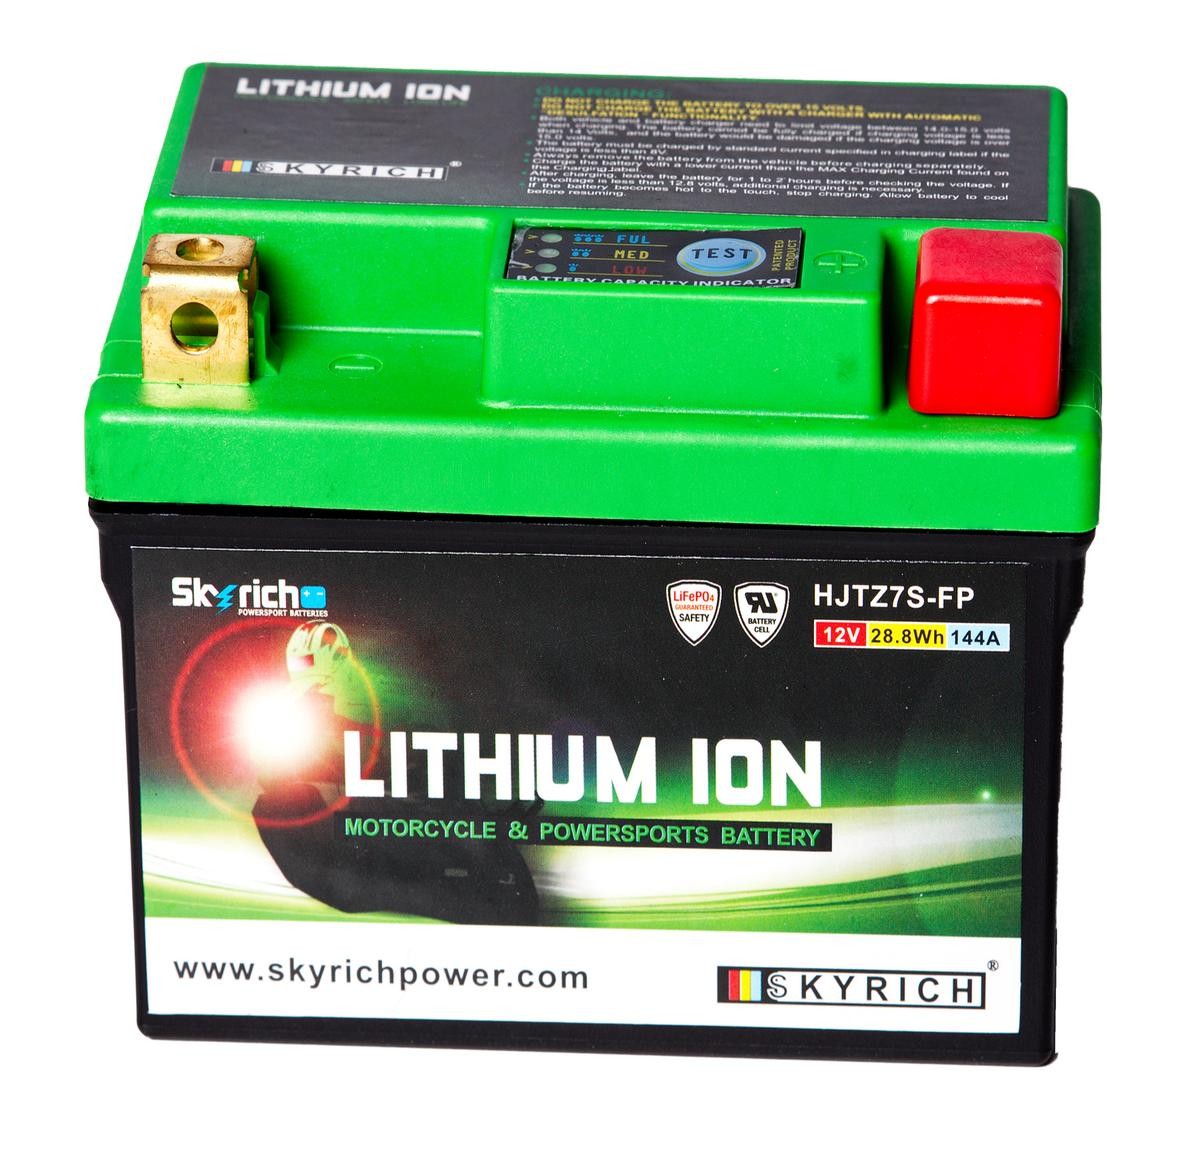 KAWASAKI NINJA Batterie 12,8V 2,4Ah 144A N Li-Ionen-Batterie SKYRICH LITHIUM ION HJTZ7S-FP